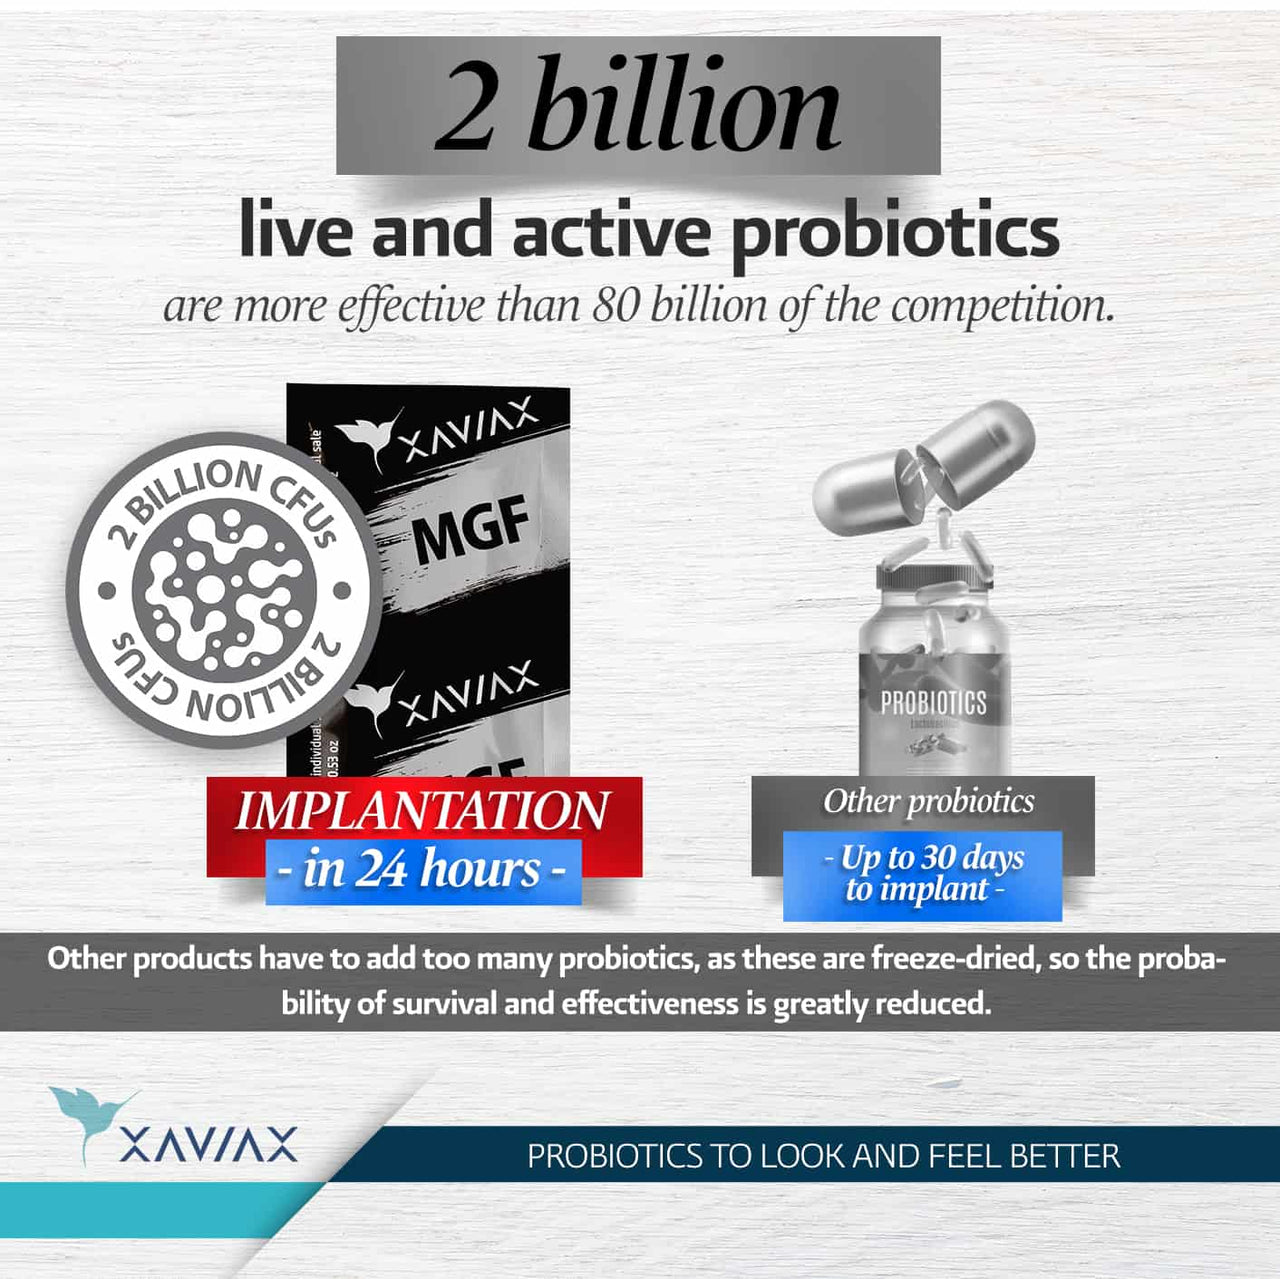 mgf have 2 billion live and active probiotics